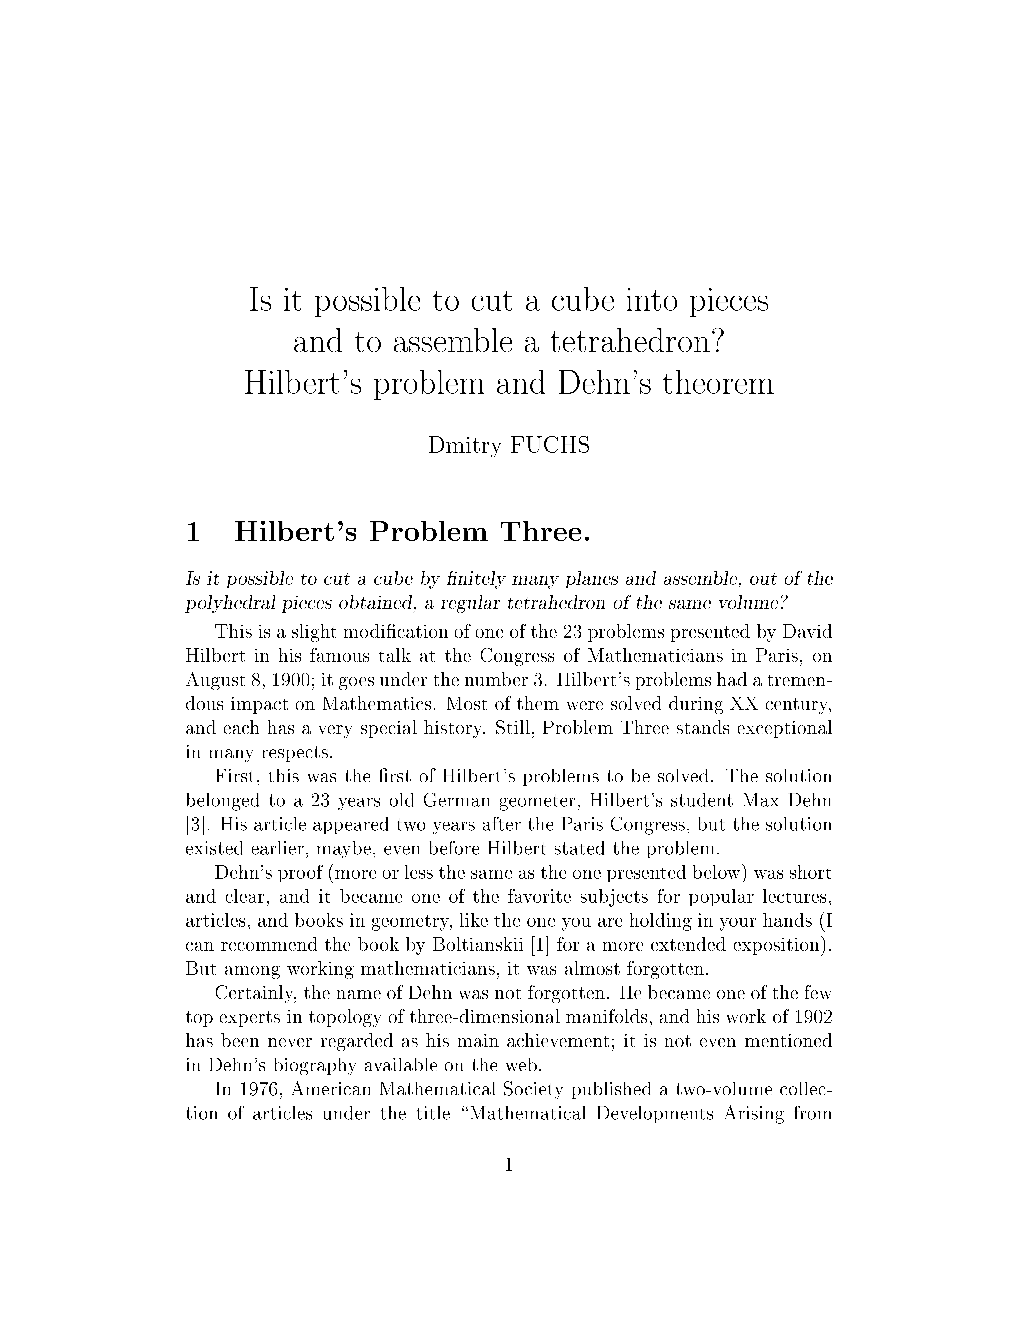 Hilbert's Problem and Dehn's Theorem